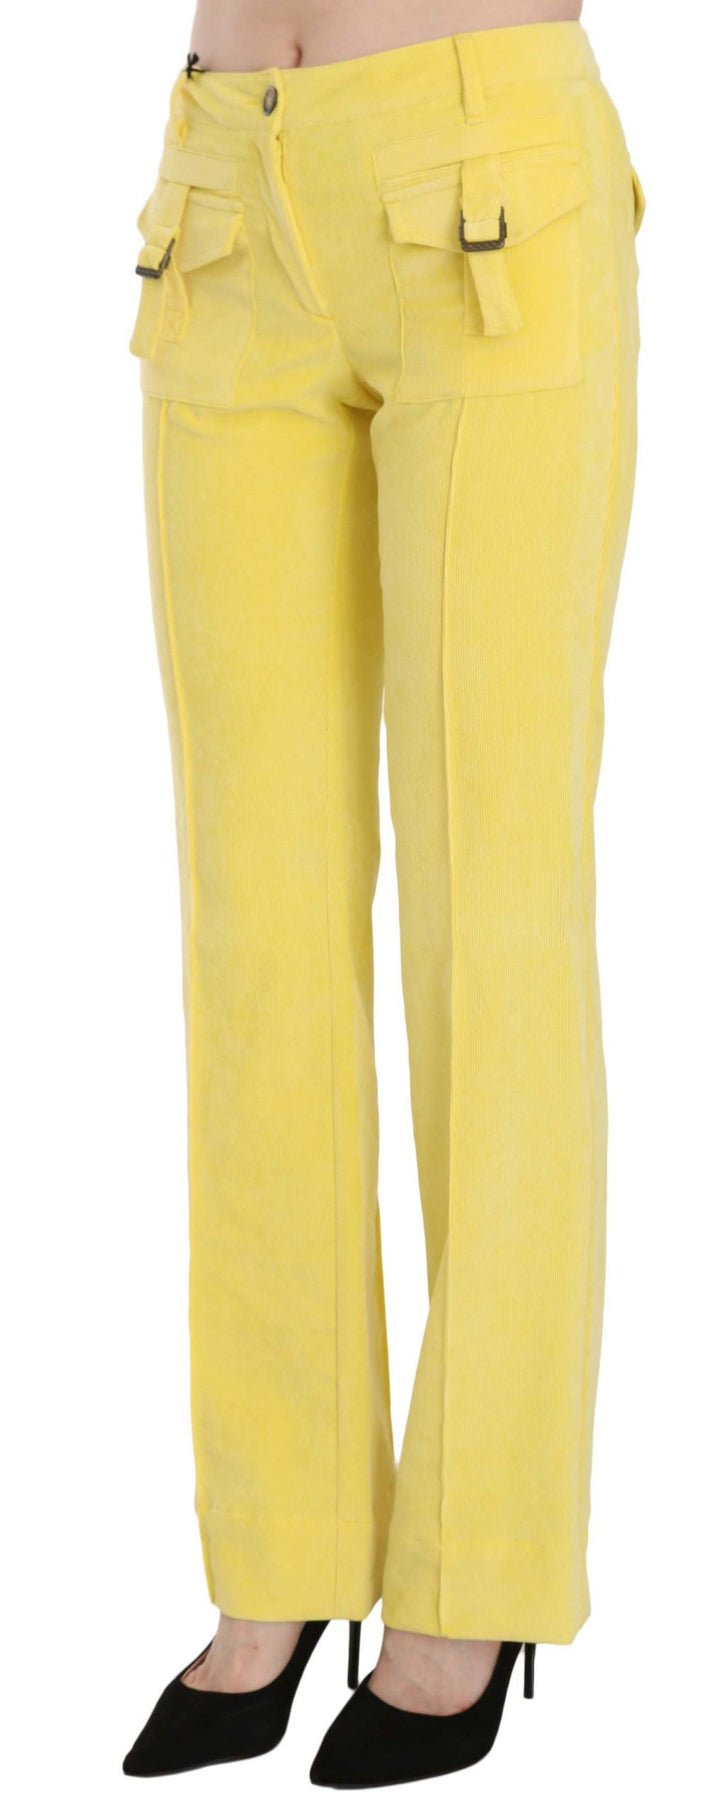 Just Cavalli Chic Yellow Corduroy Mid Waist Pants